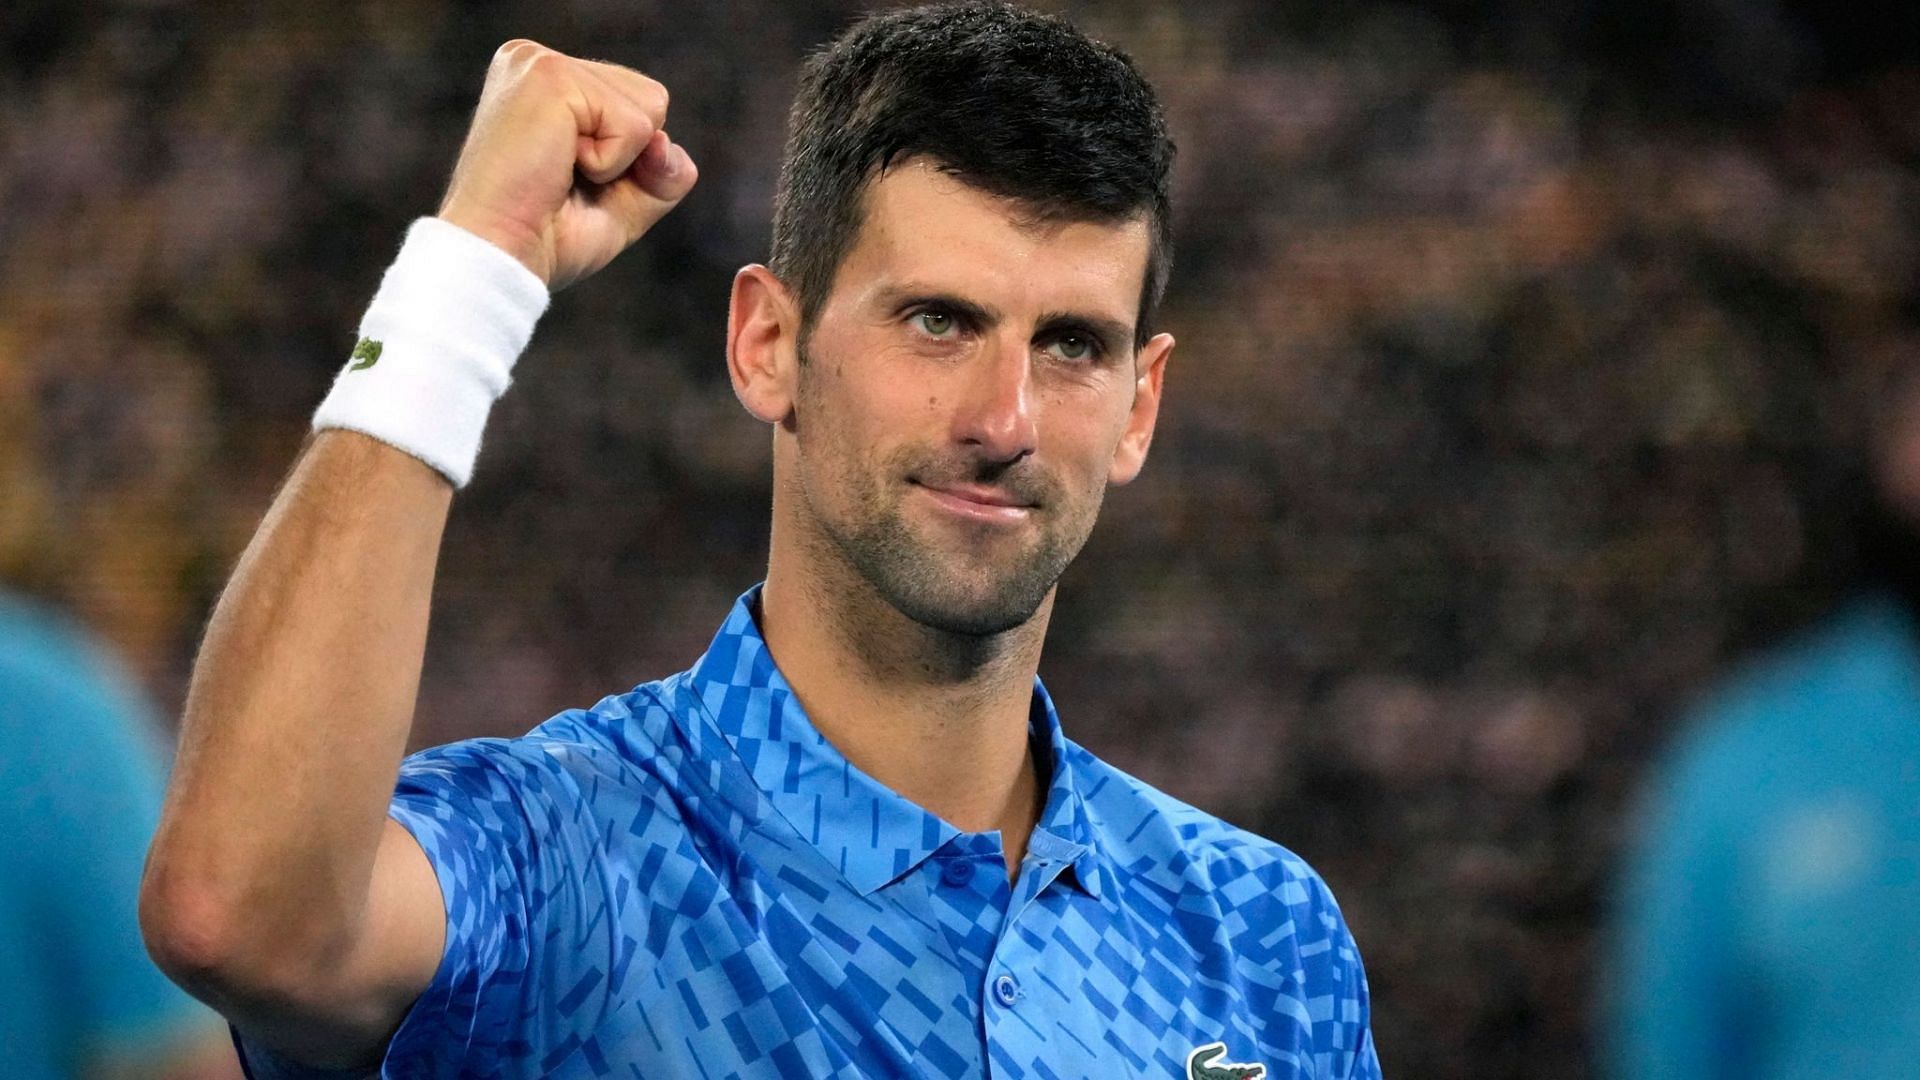 Novak Djokovic starts as the favorite to win his third title in Monte Carlo